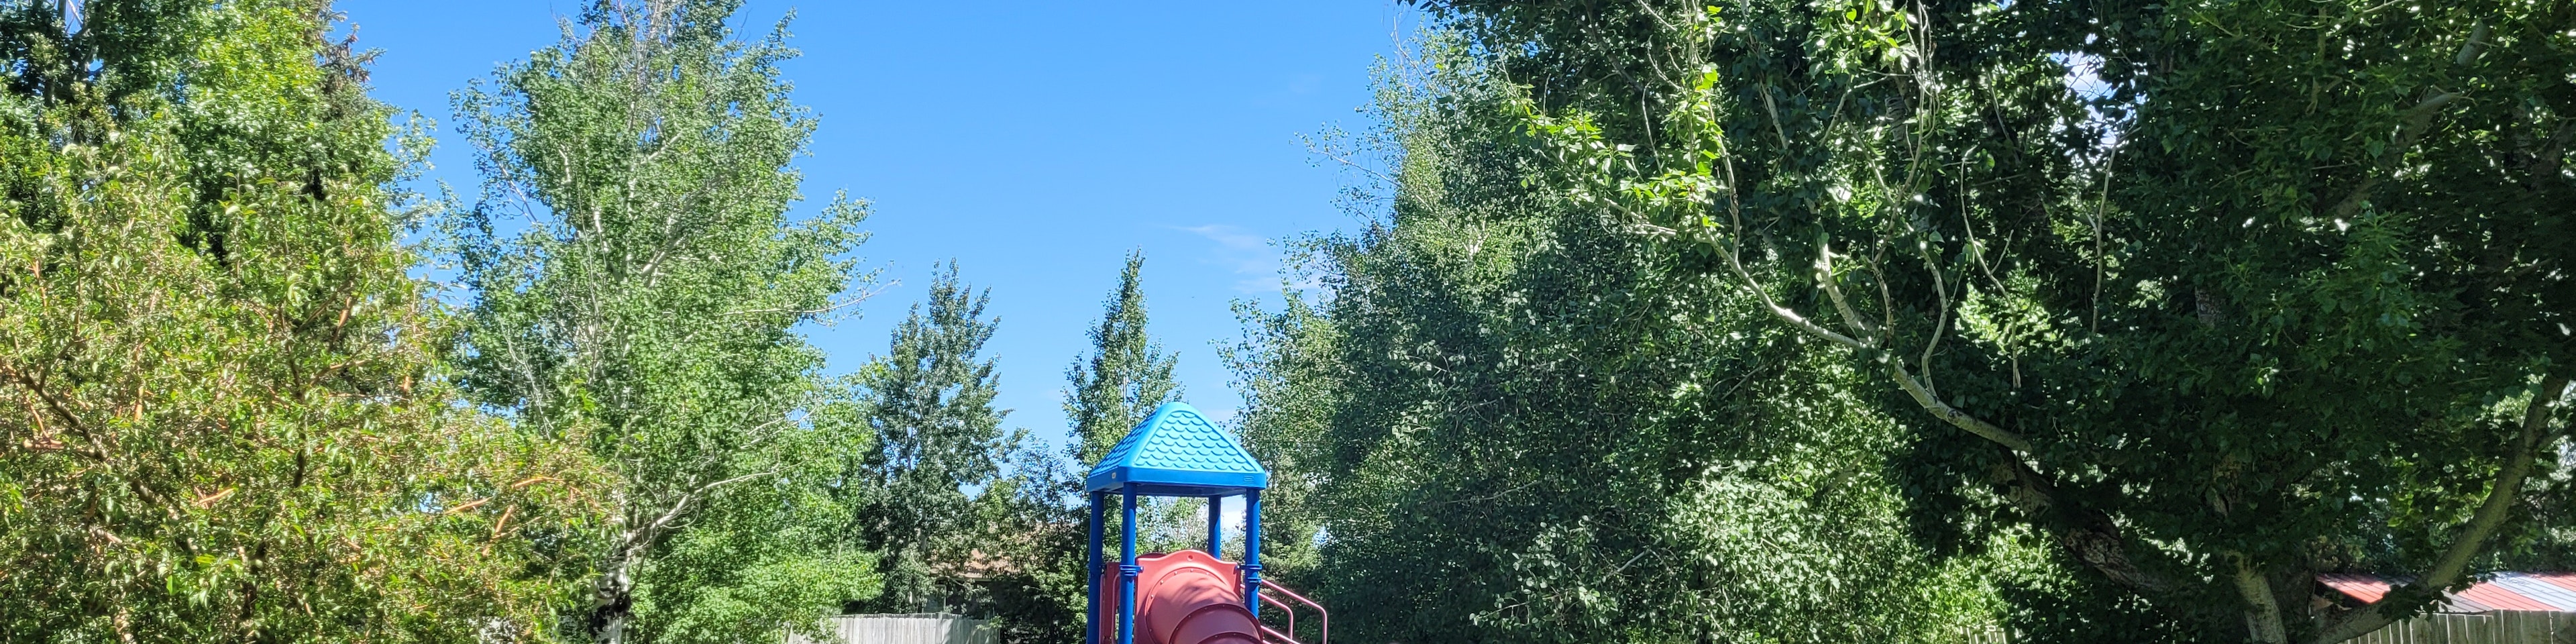 Willowcreek Park Playground in Victor Idaho.